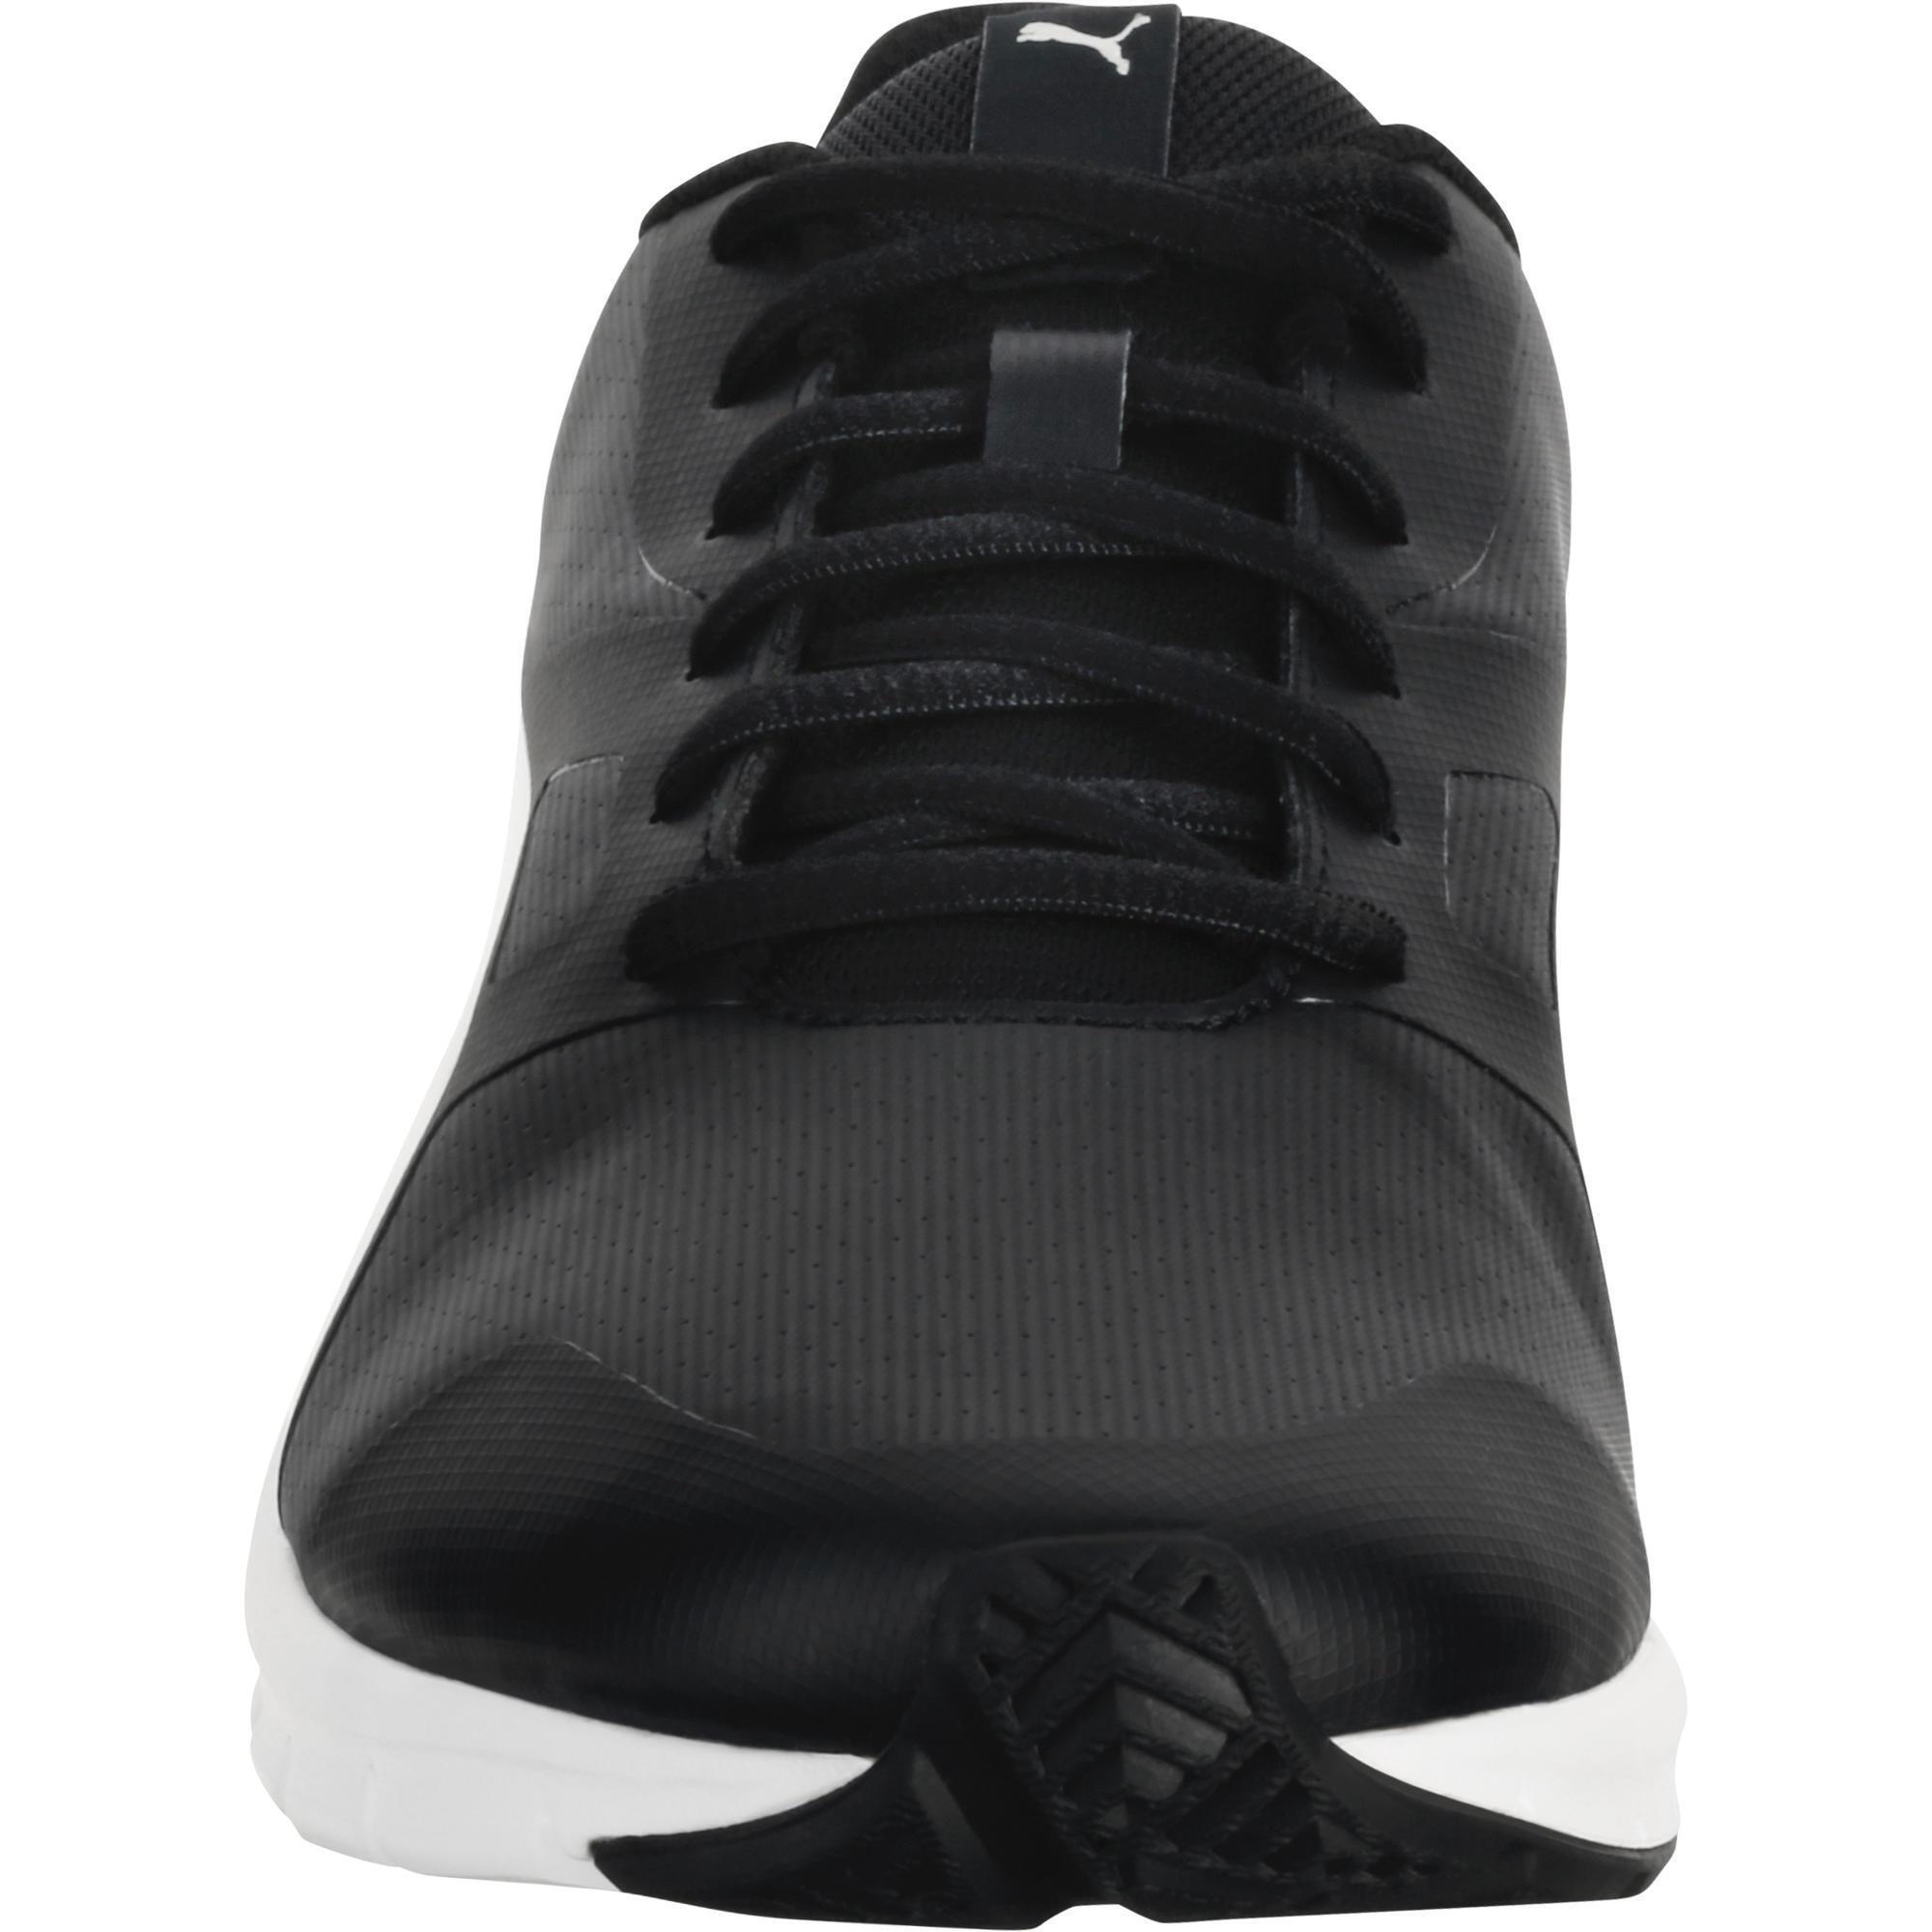 Flexracer men's active walking shoes - black 4/9